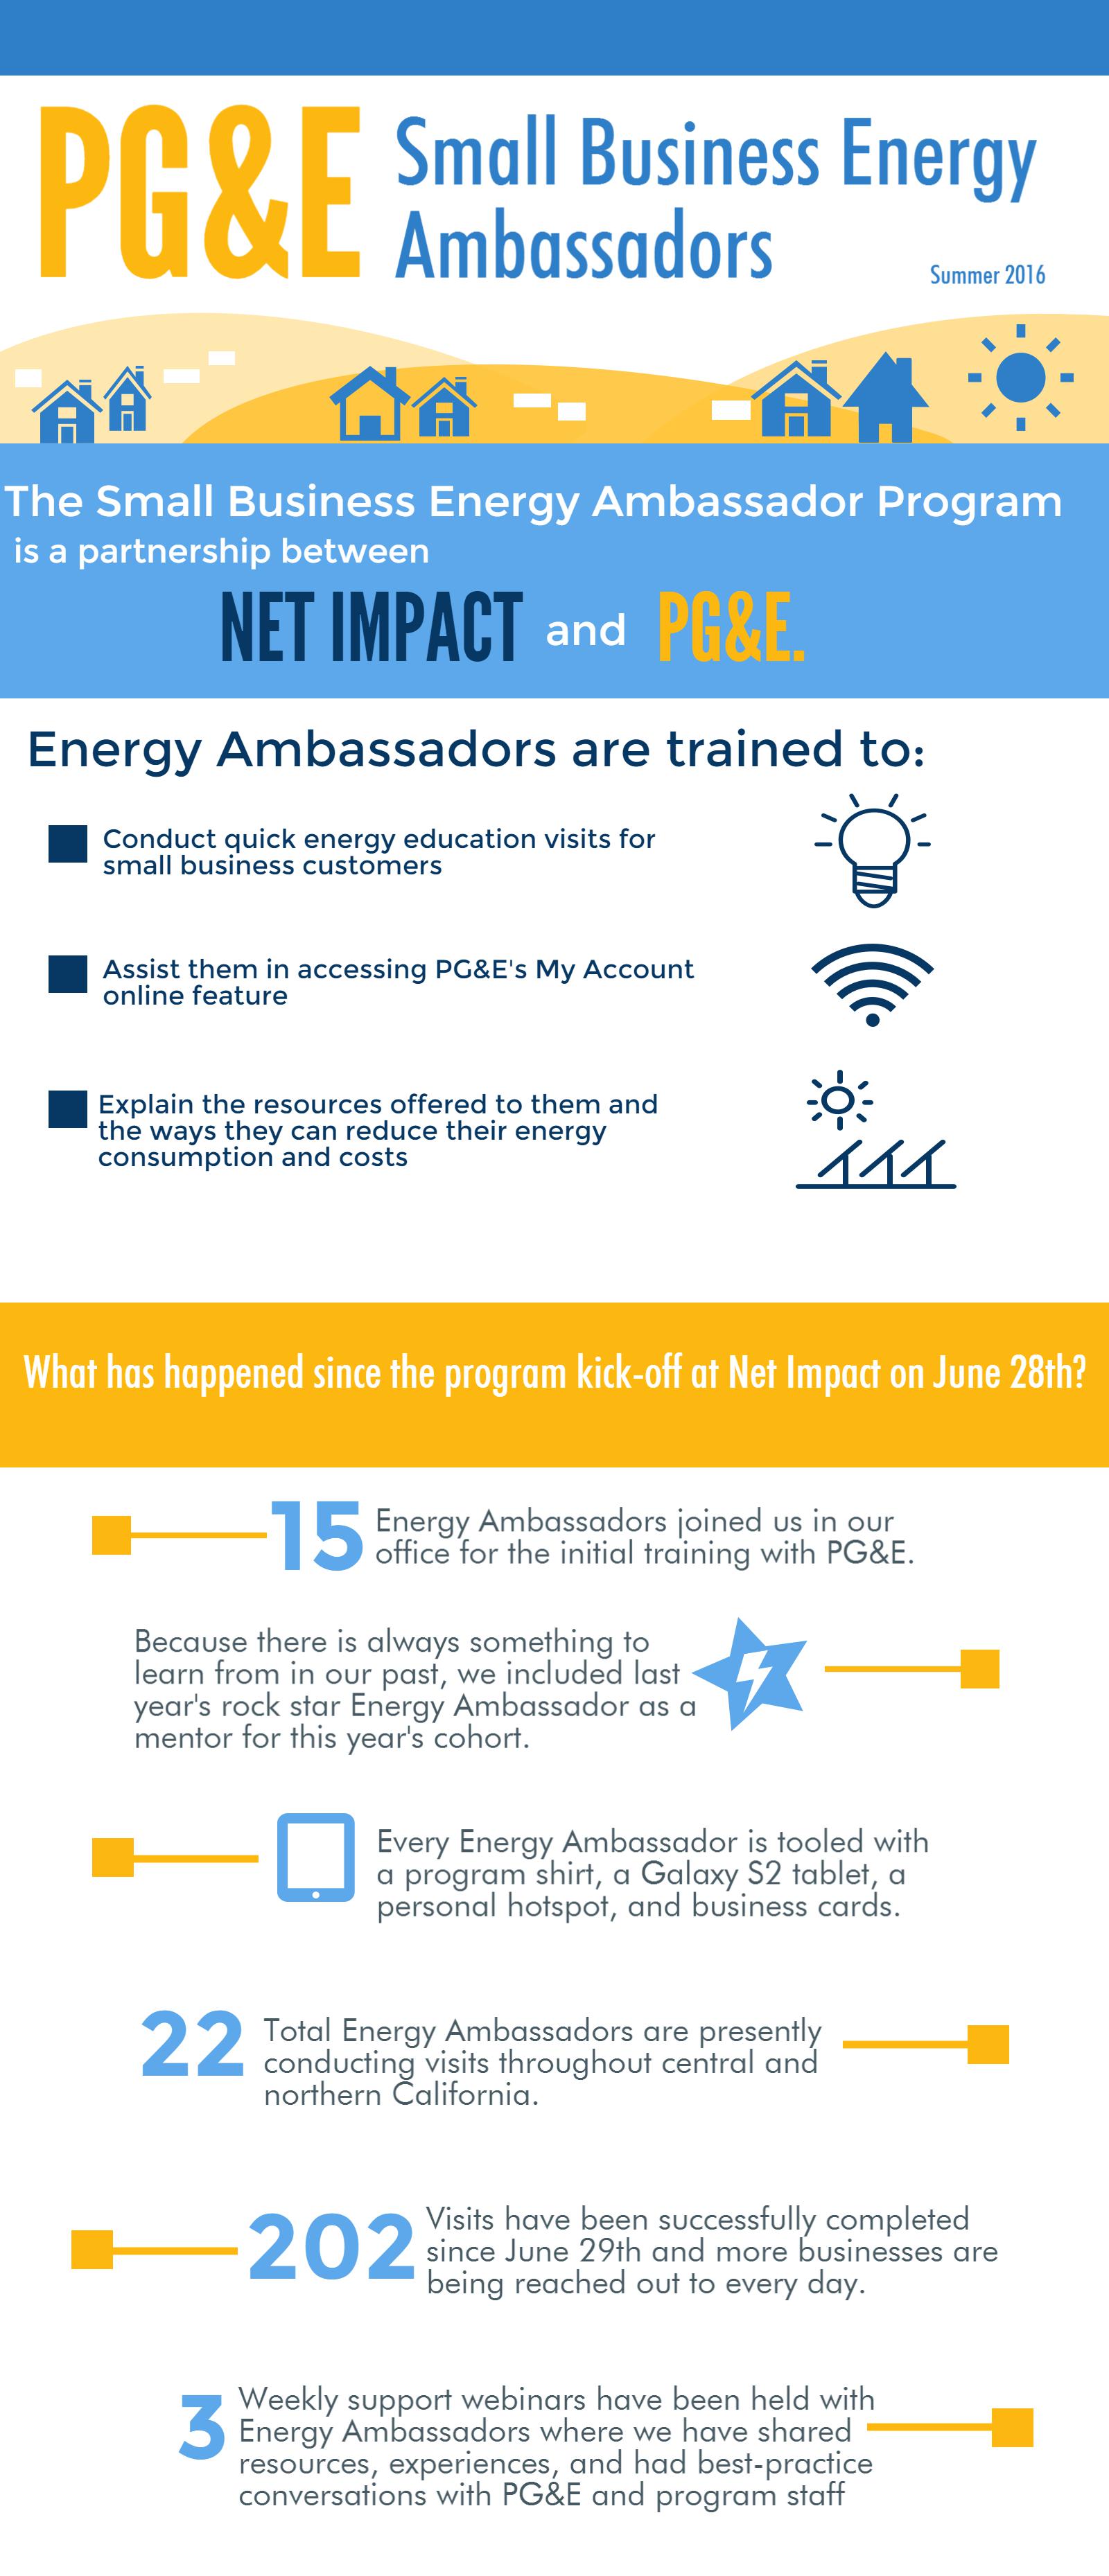 PG&E Small Business Energy Ambassadors